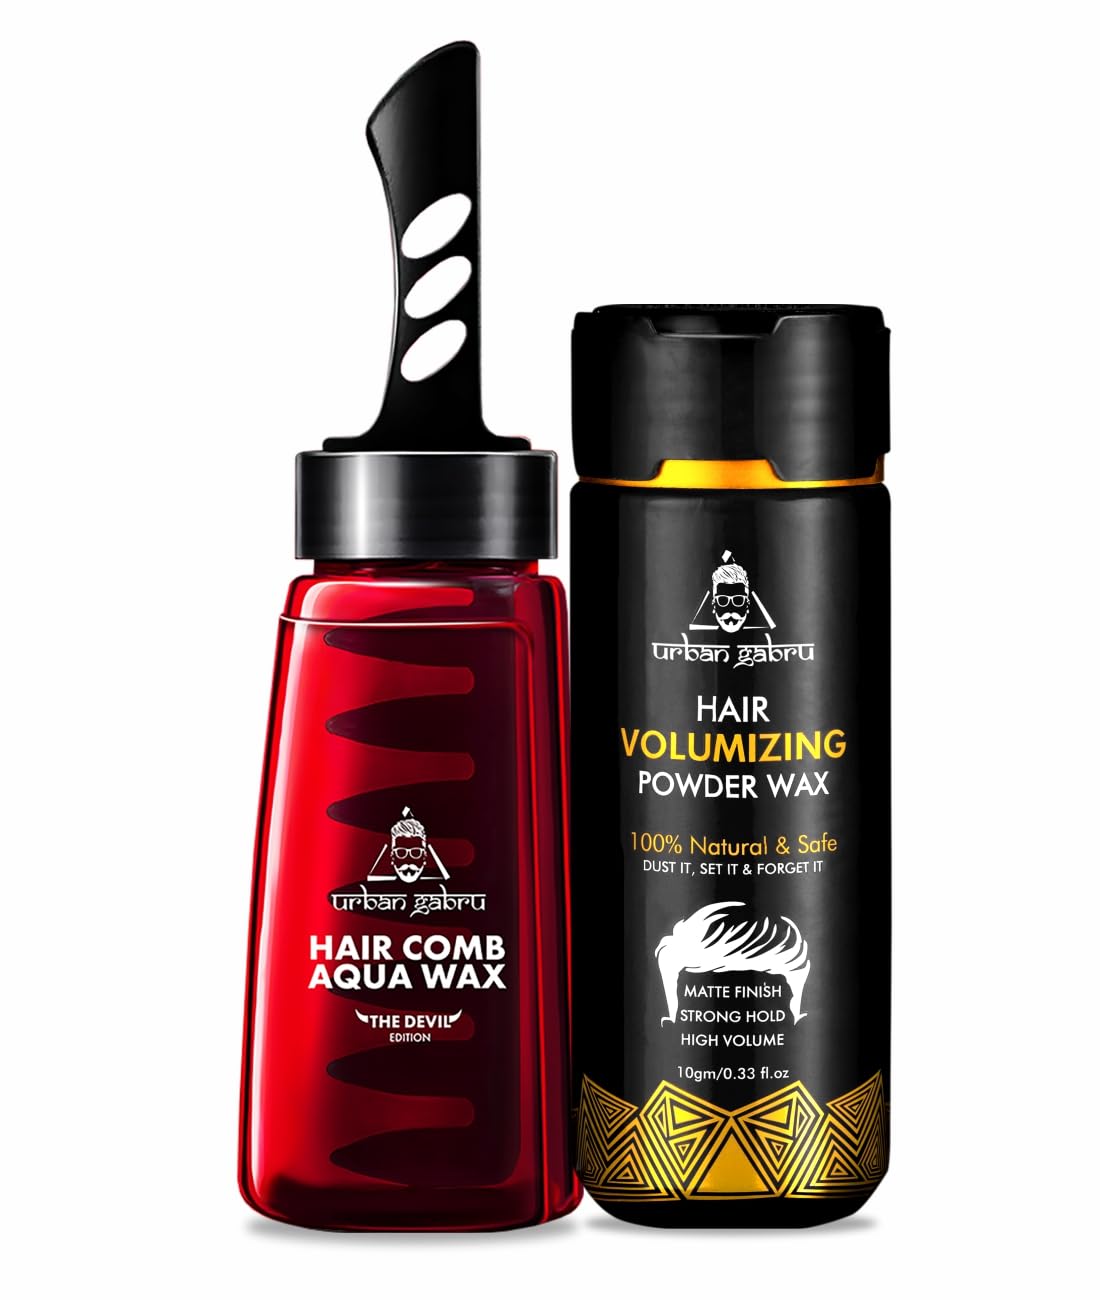 Urbangabru Hair Volumizing Powder Wax (10 Gram) + Hair Comb Aqua Wax (260 ML) - Men's Grooming Combo Kit